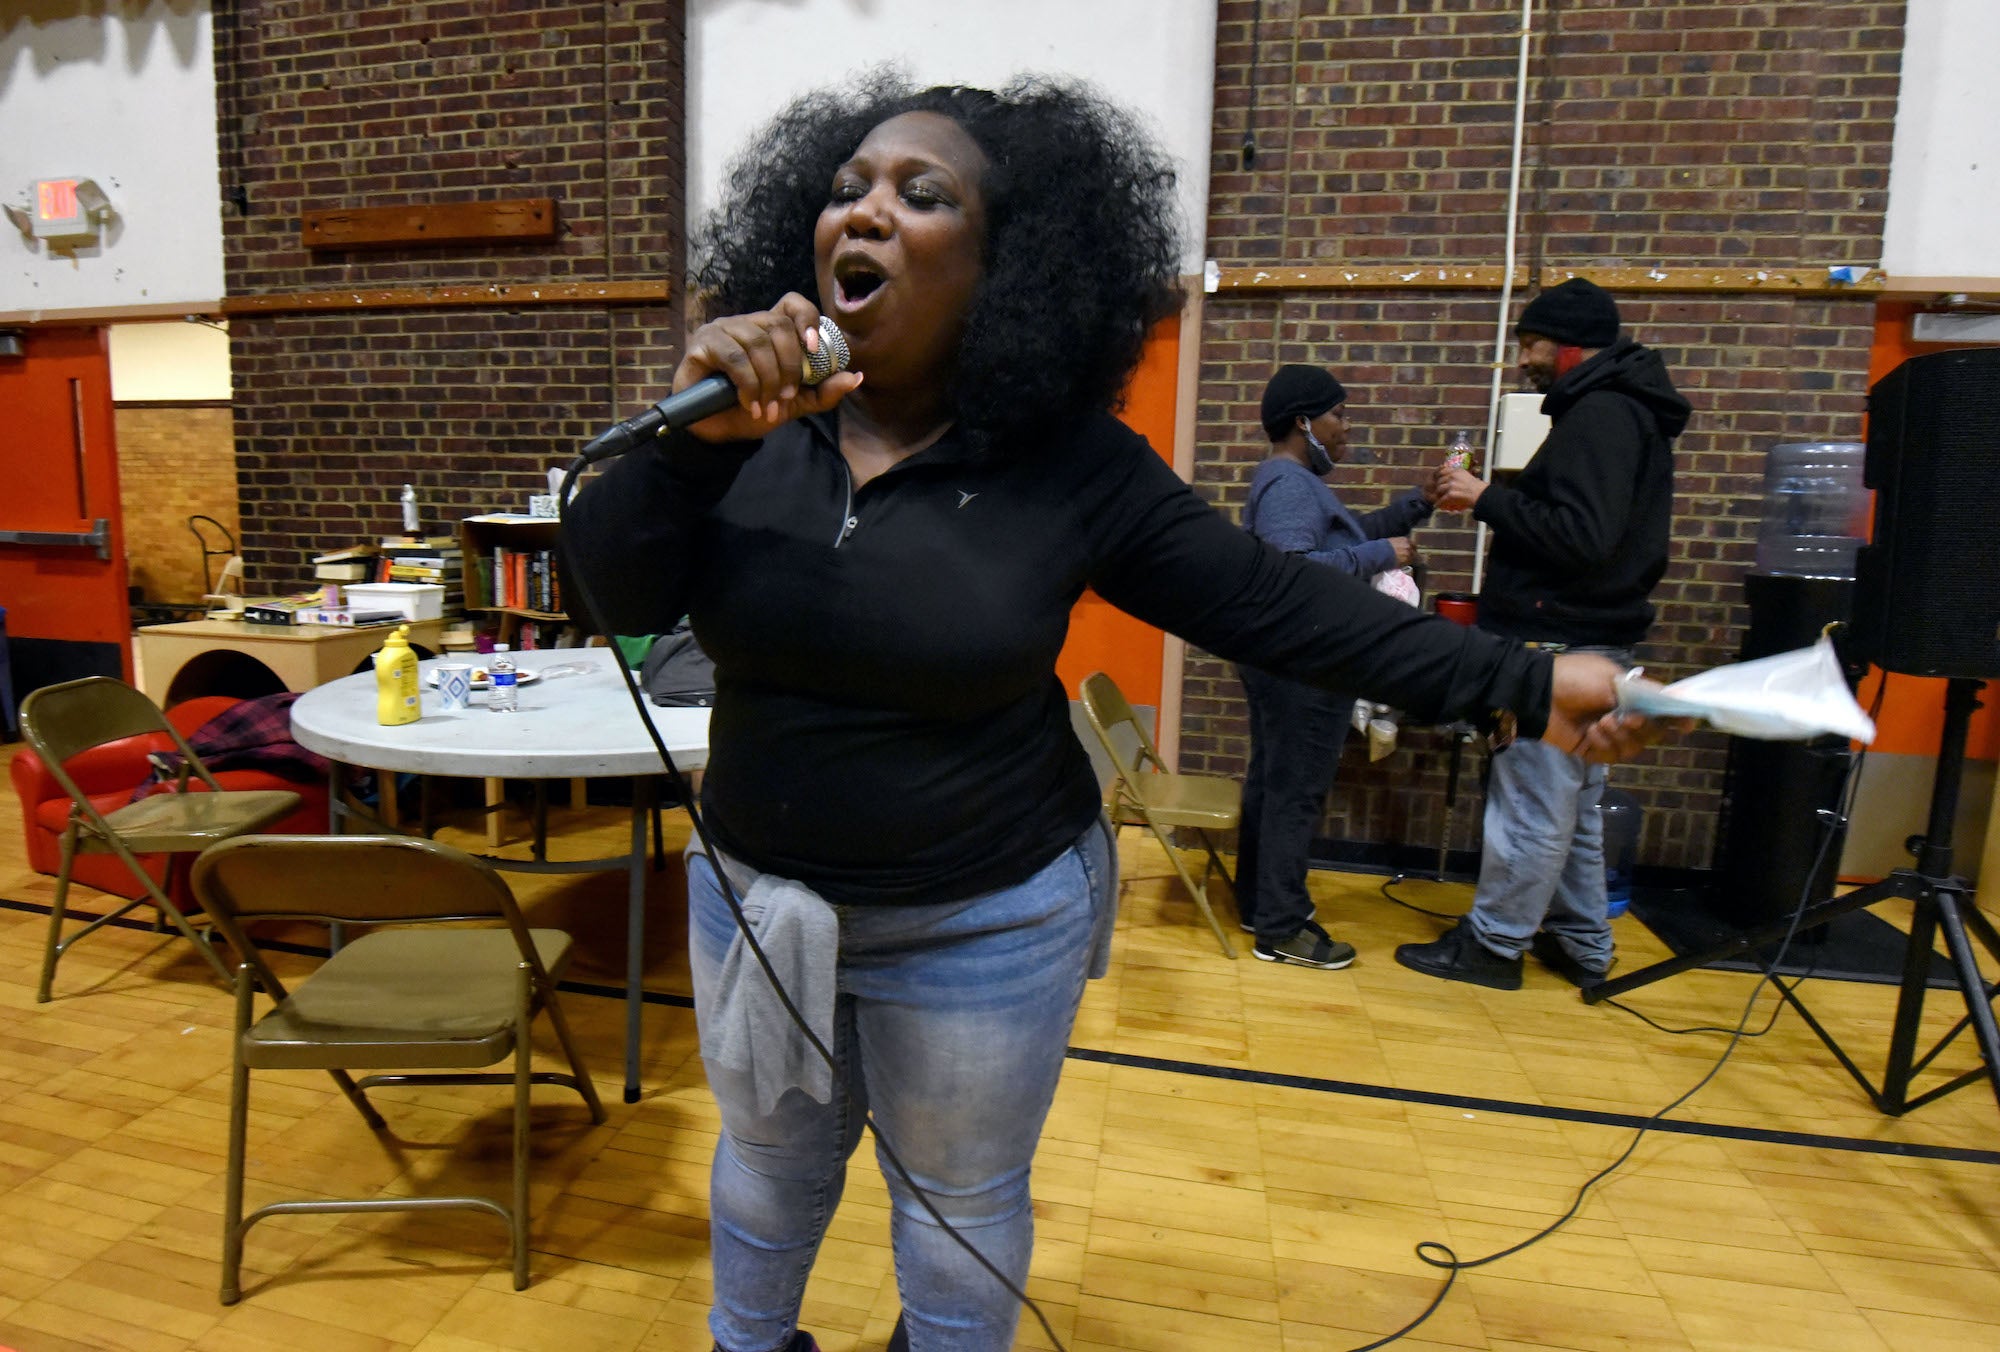 Tawanda Jones breaks into song to entertain her patrons